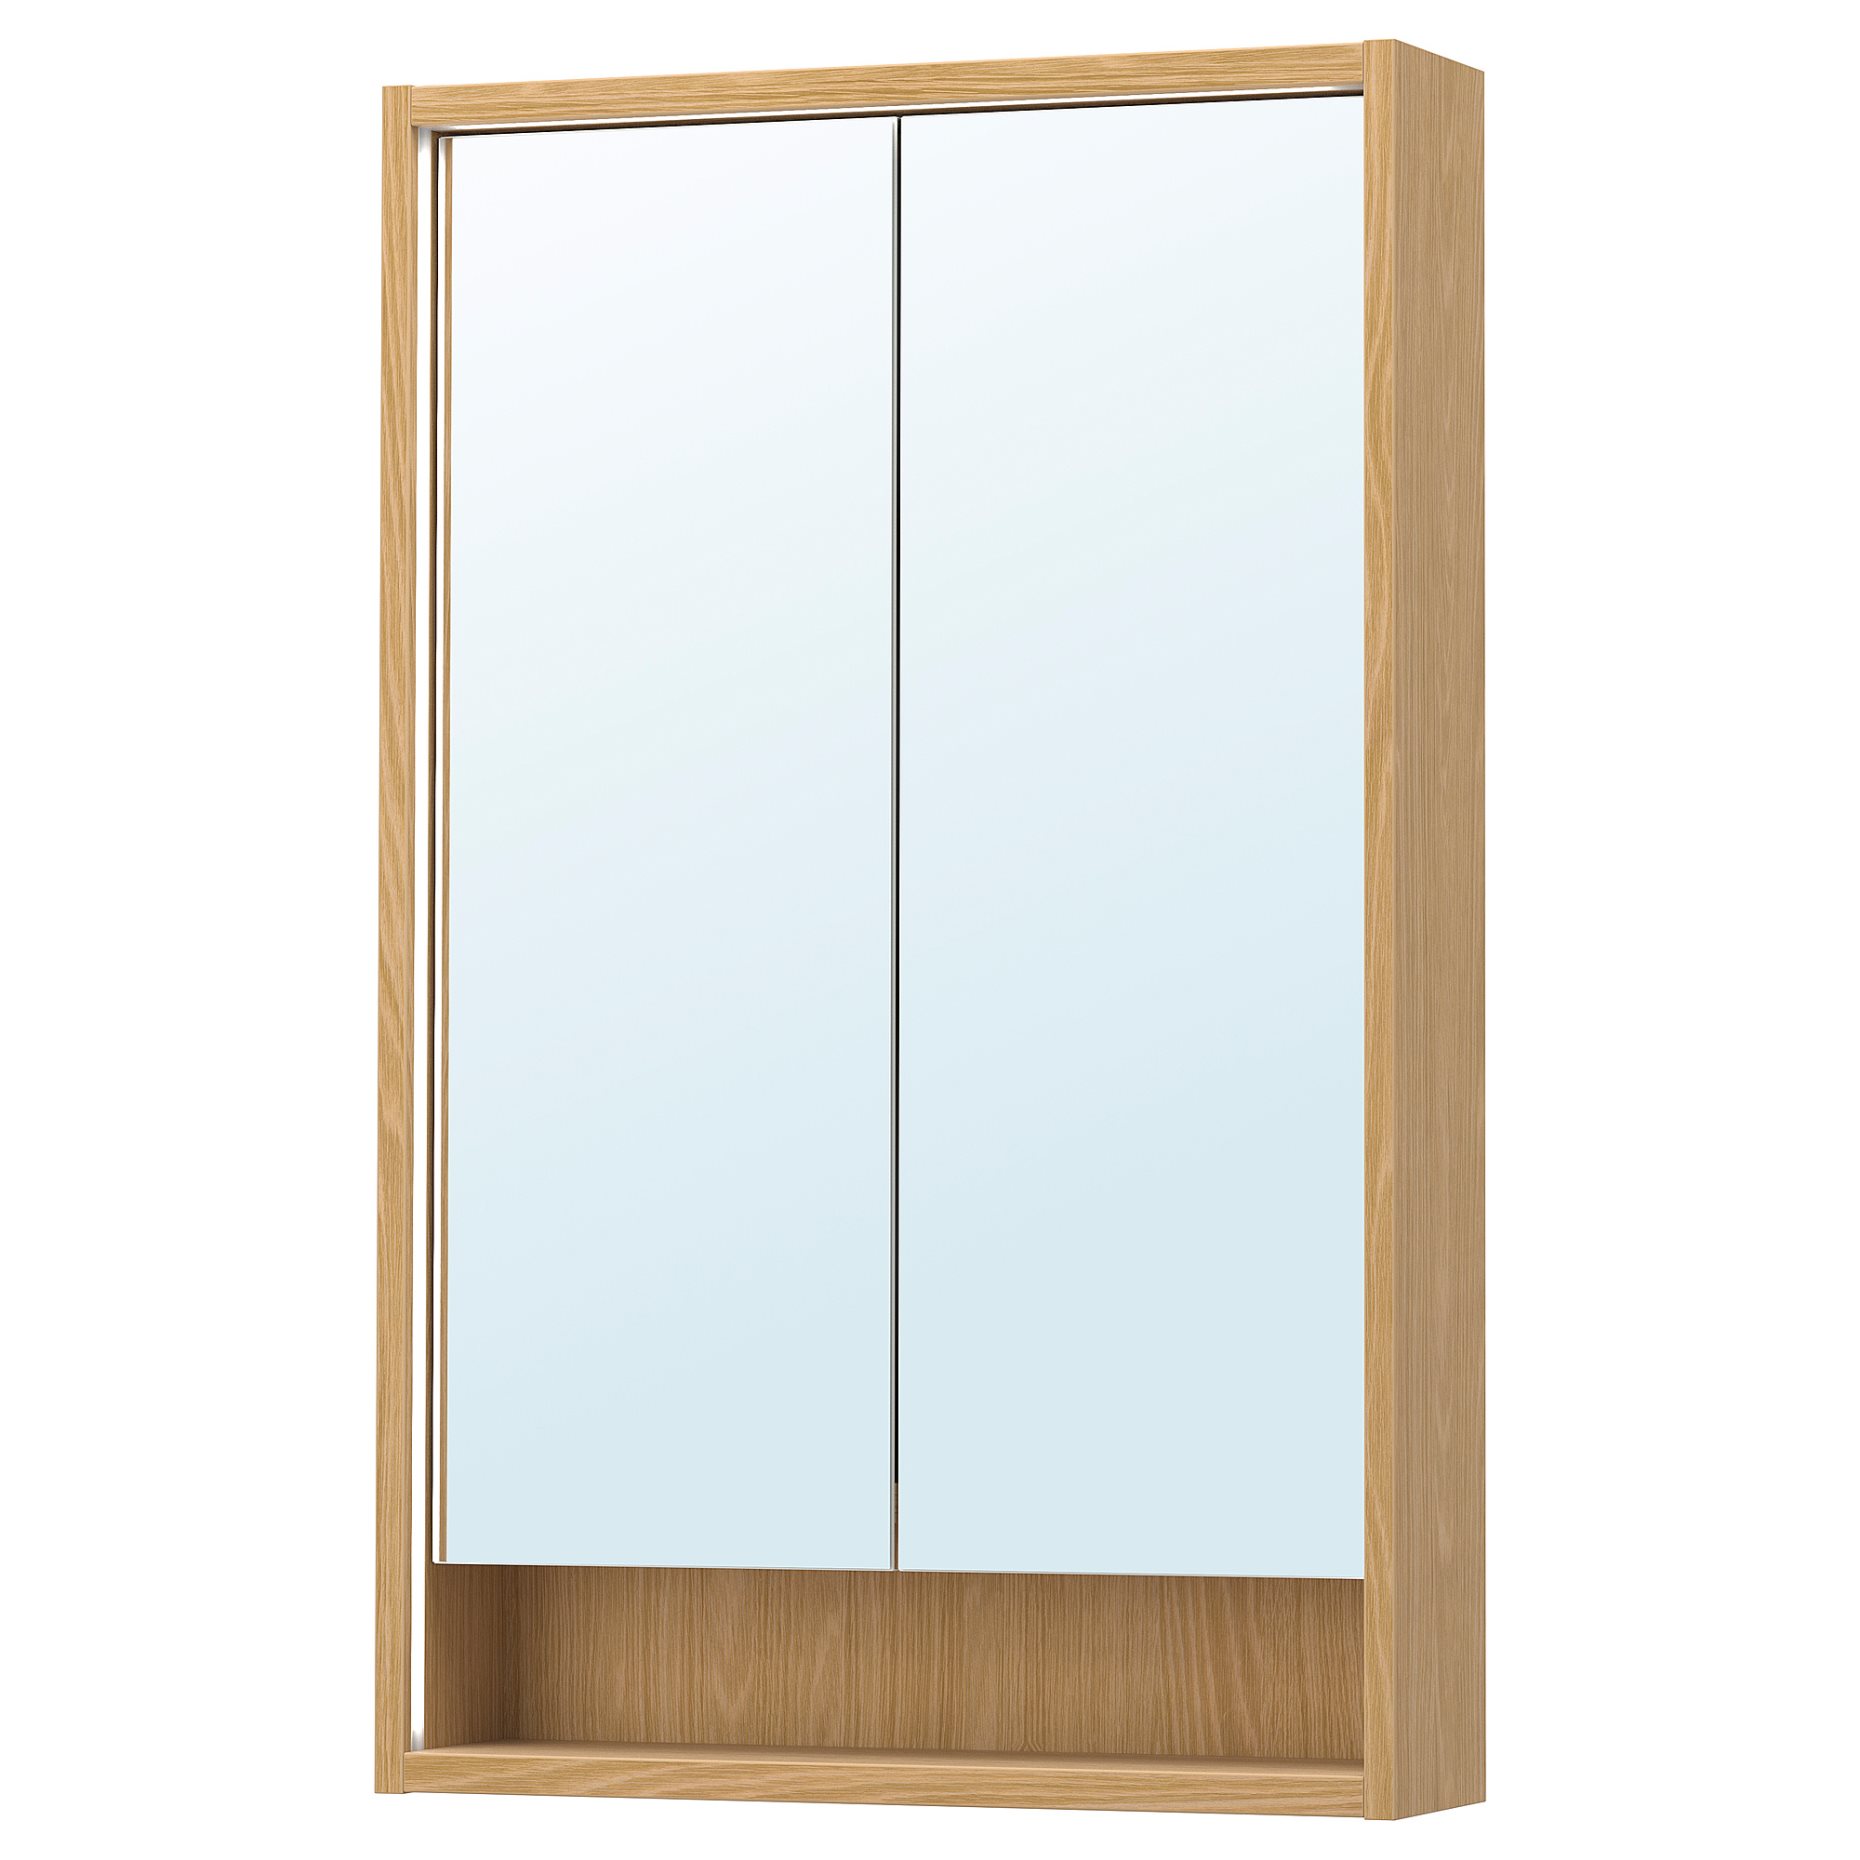 FAXALVEN, ντουλάπι με καθρέφτη με ενσωματωμένο φωτισμό, 60x15x95 cm, 095.167.11